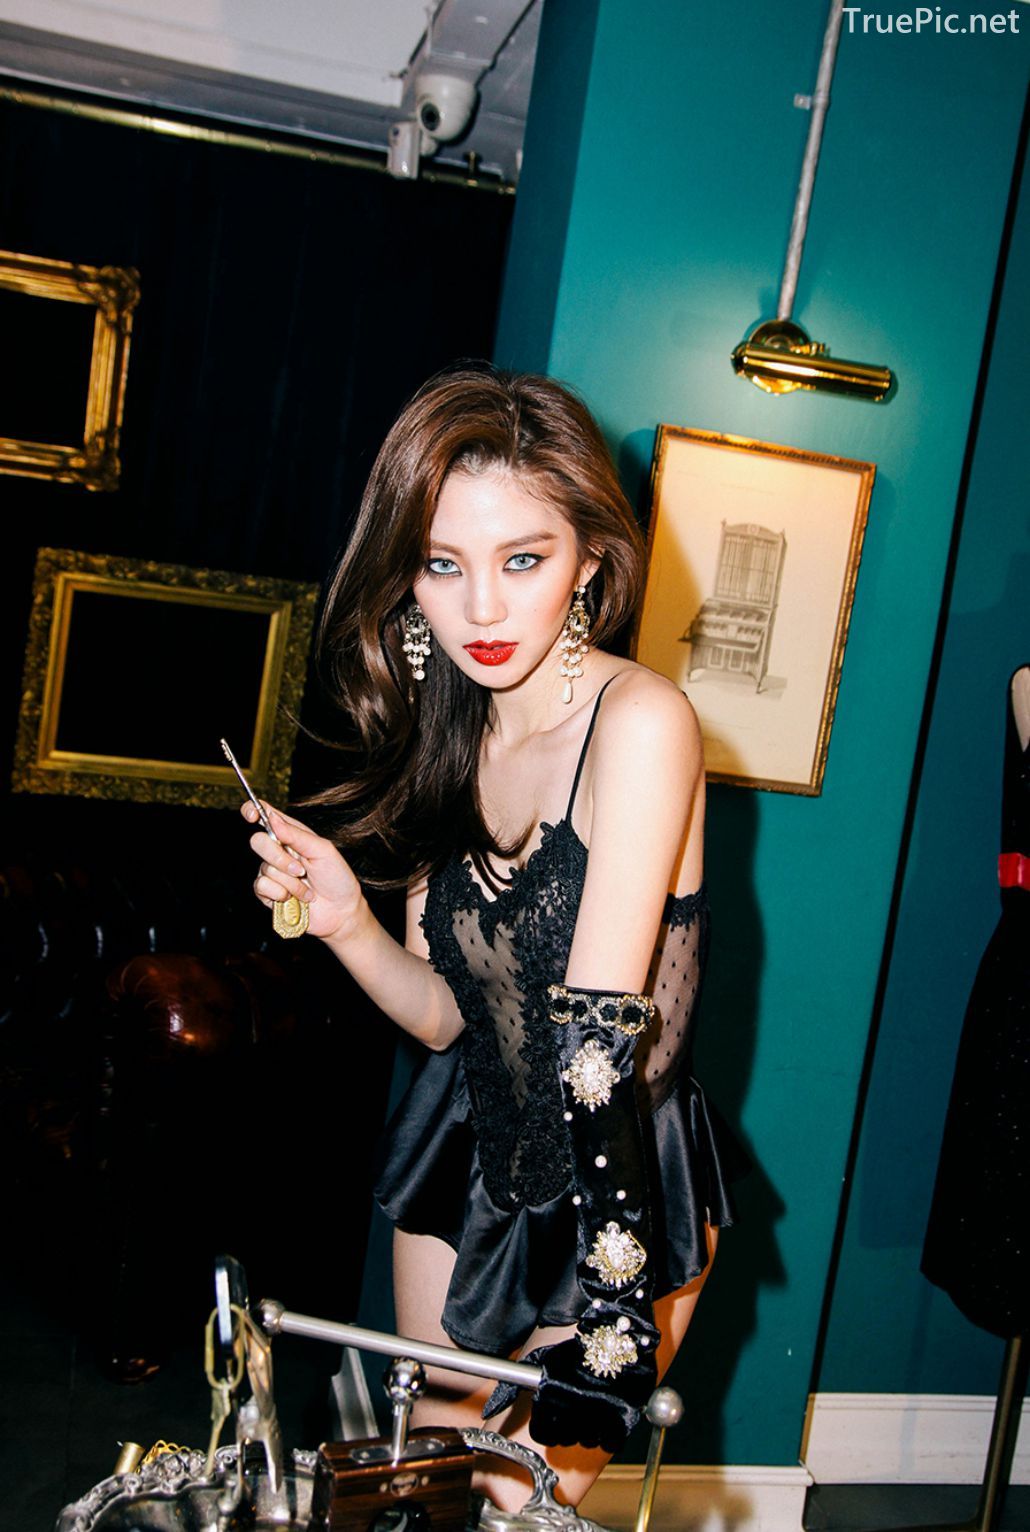 Lee Chae Eun - Korean Lingerie Model - Love Me More Sexy - TruePic.net - Picture 22